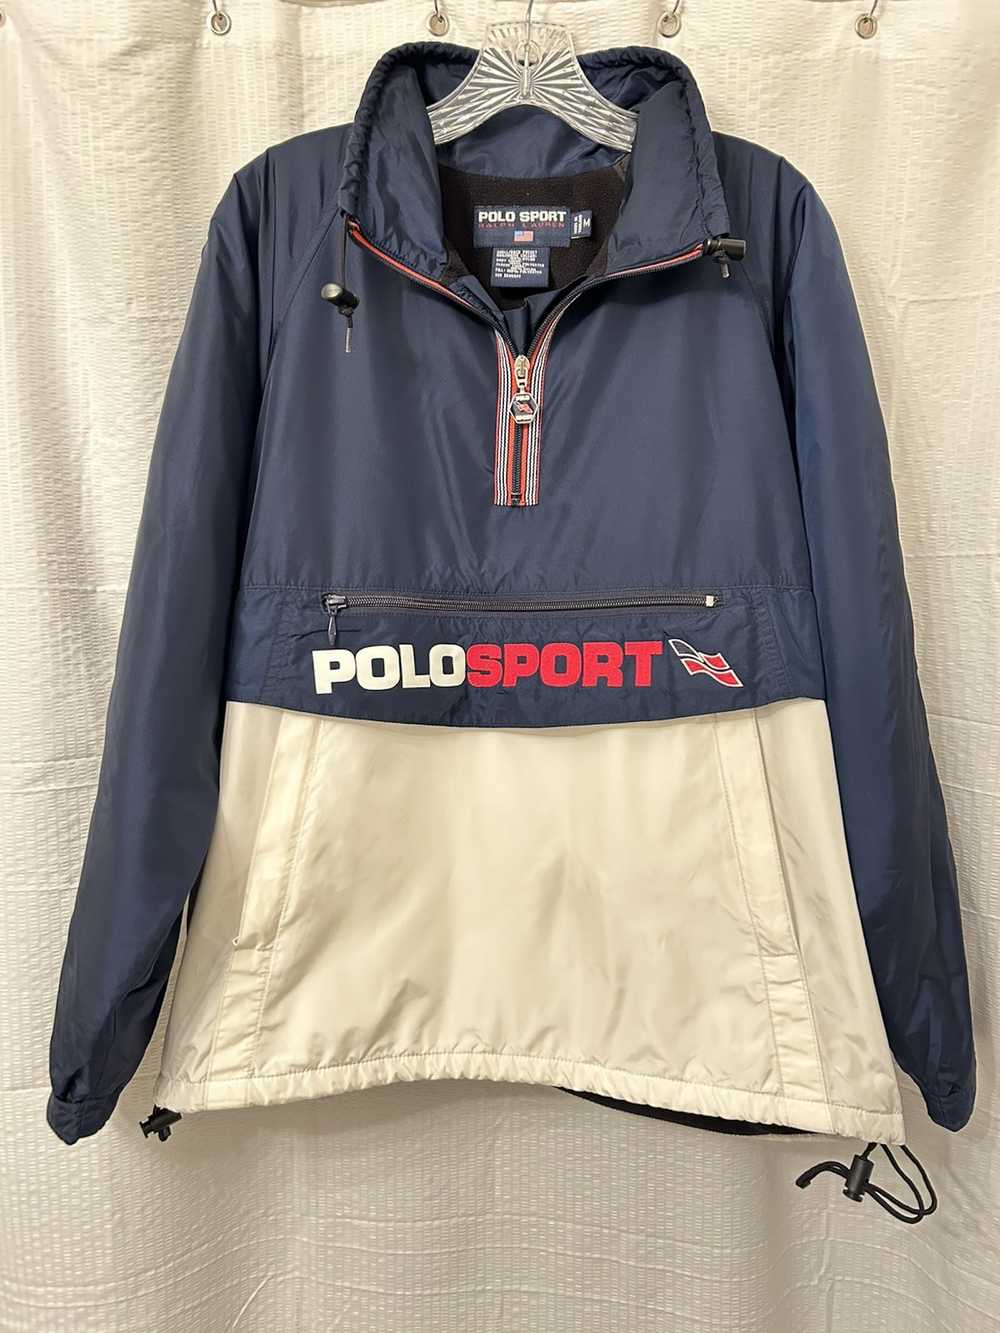 Polo Ralph Lauren 90’s Vintage Polo Sport pullove… - image 2